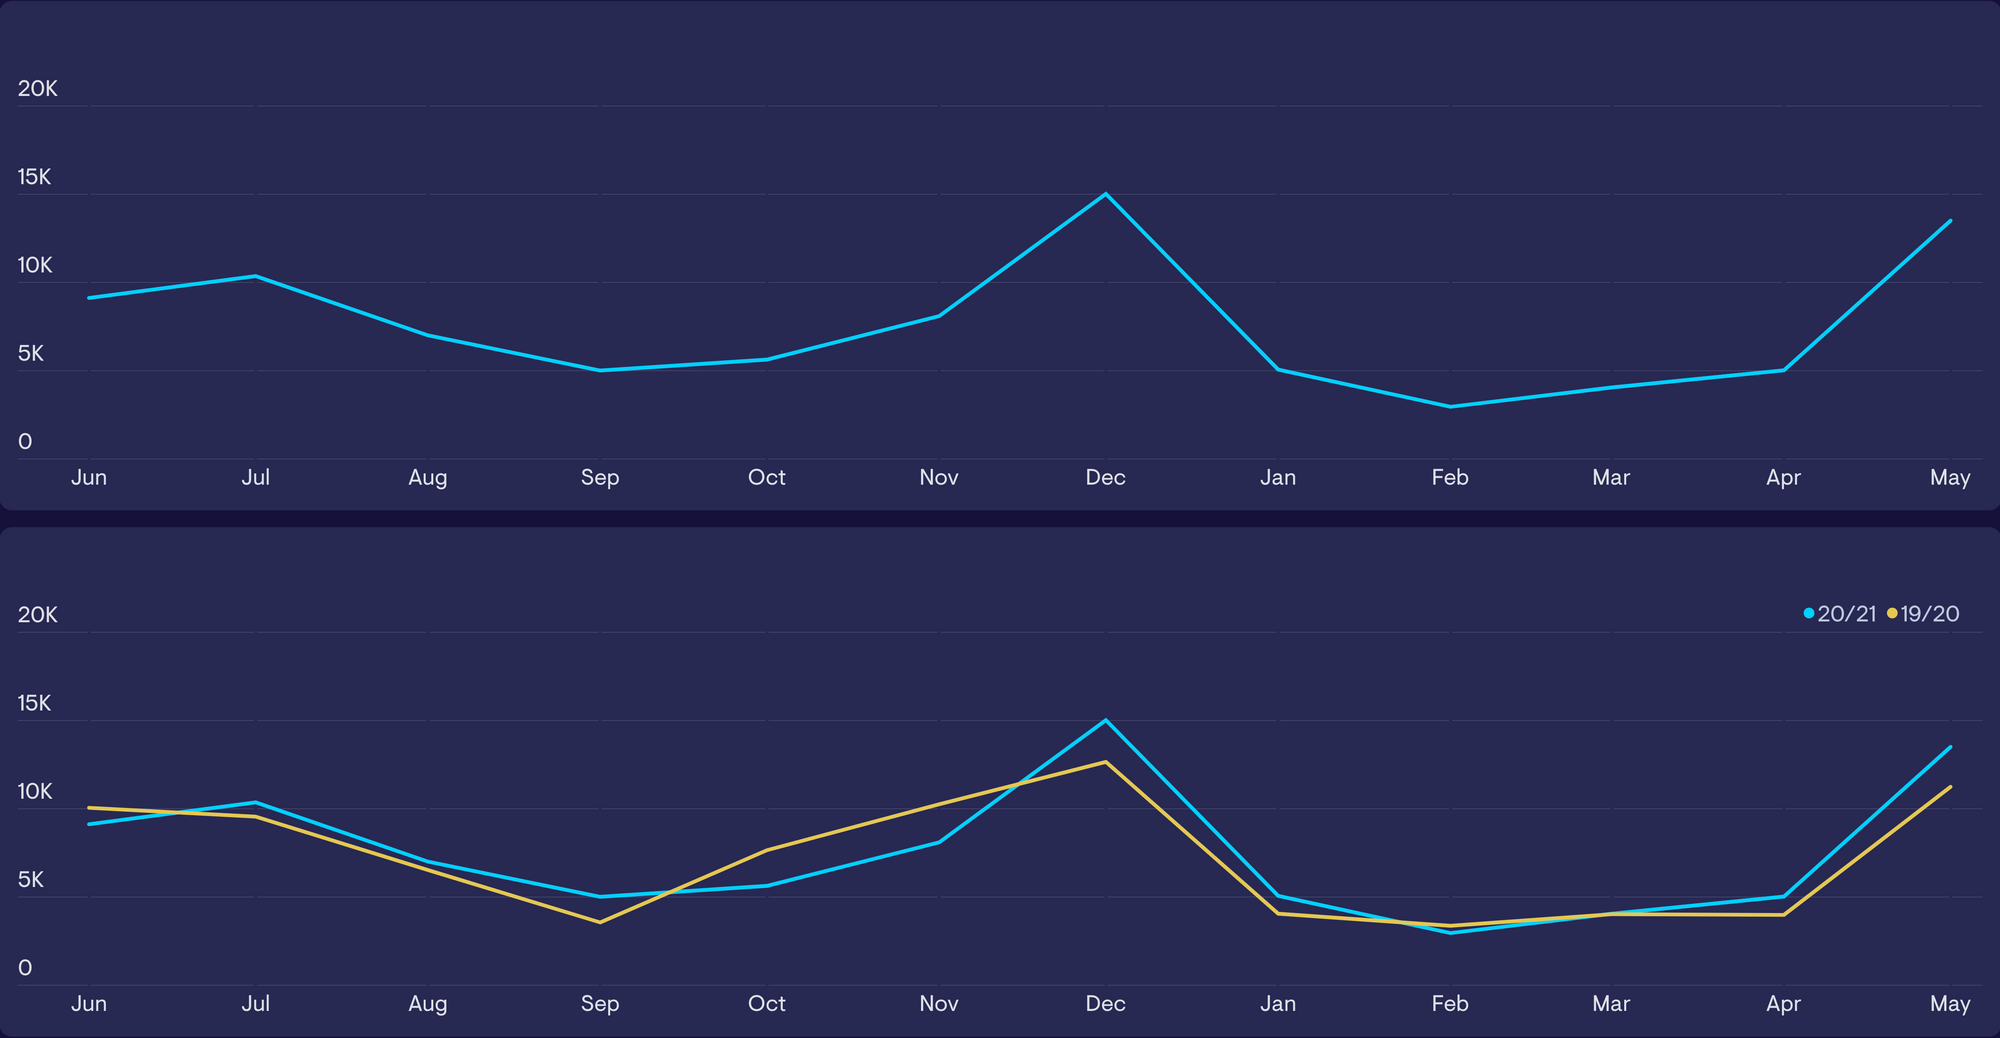 trendline with seasonal context comparison